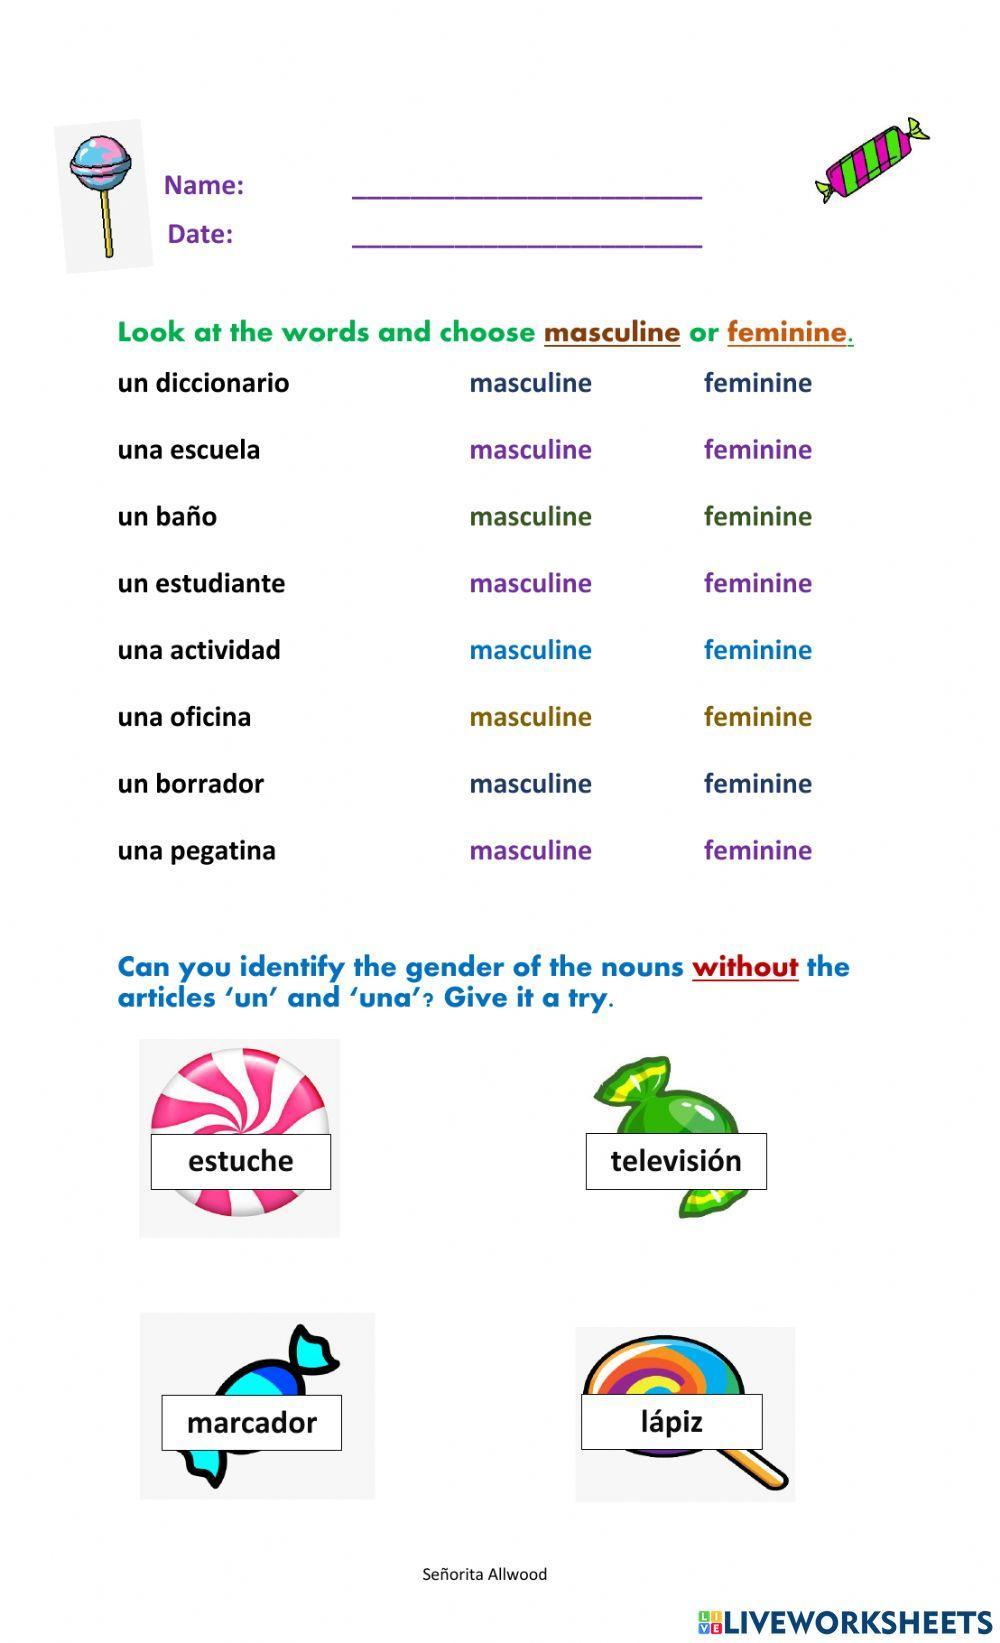 Grammatical Gender of Unknown Nouns